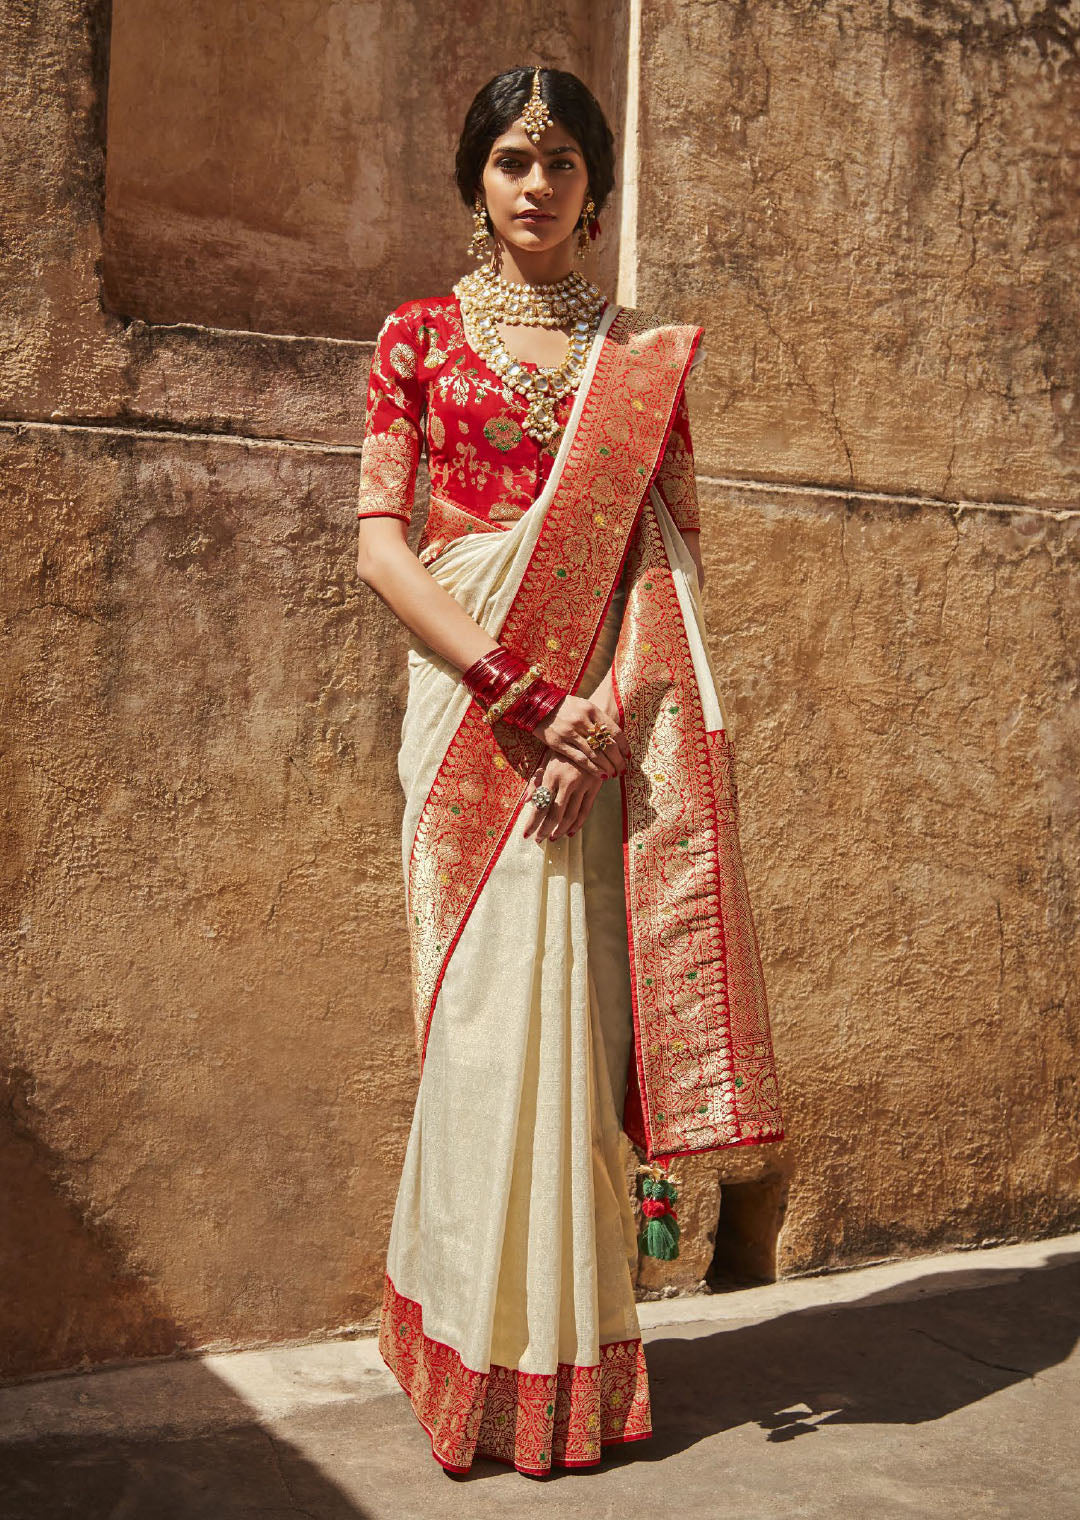 Buy Traditional Uppada Silk Sarees for Wedding - Online The Chennai Silks